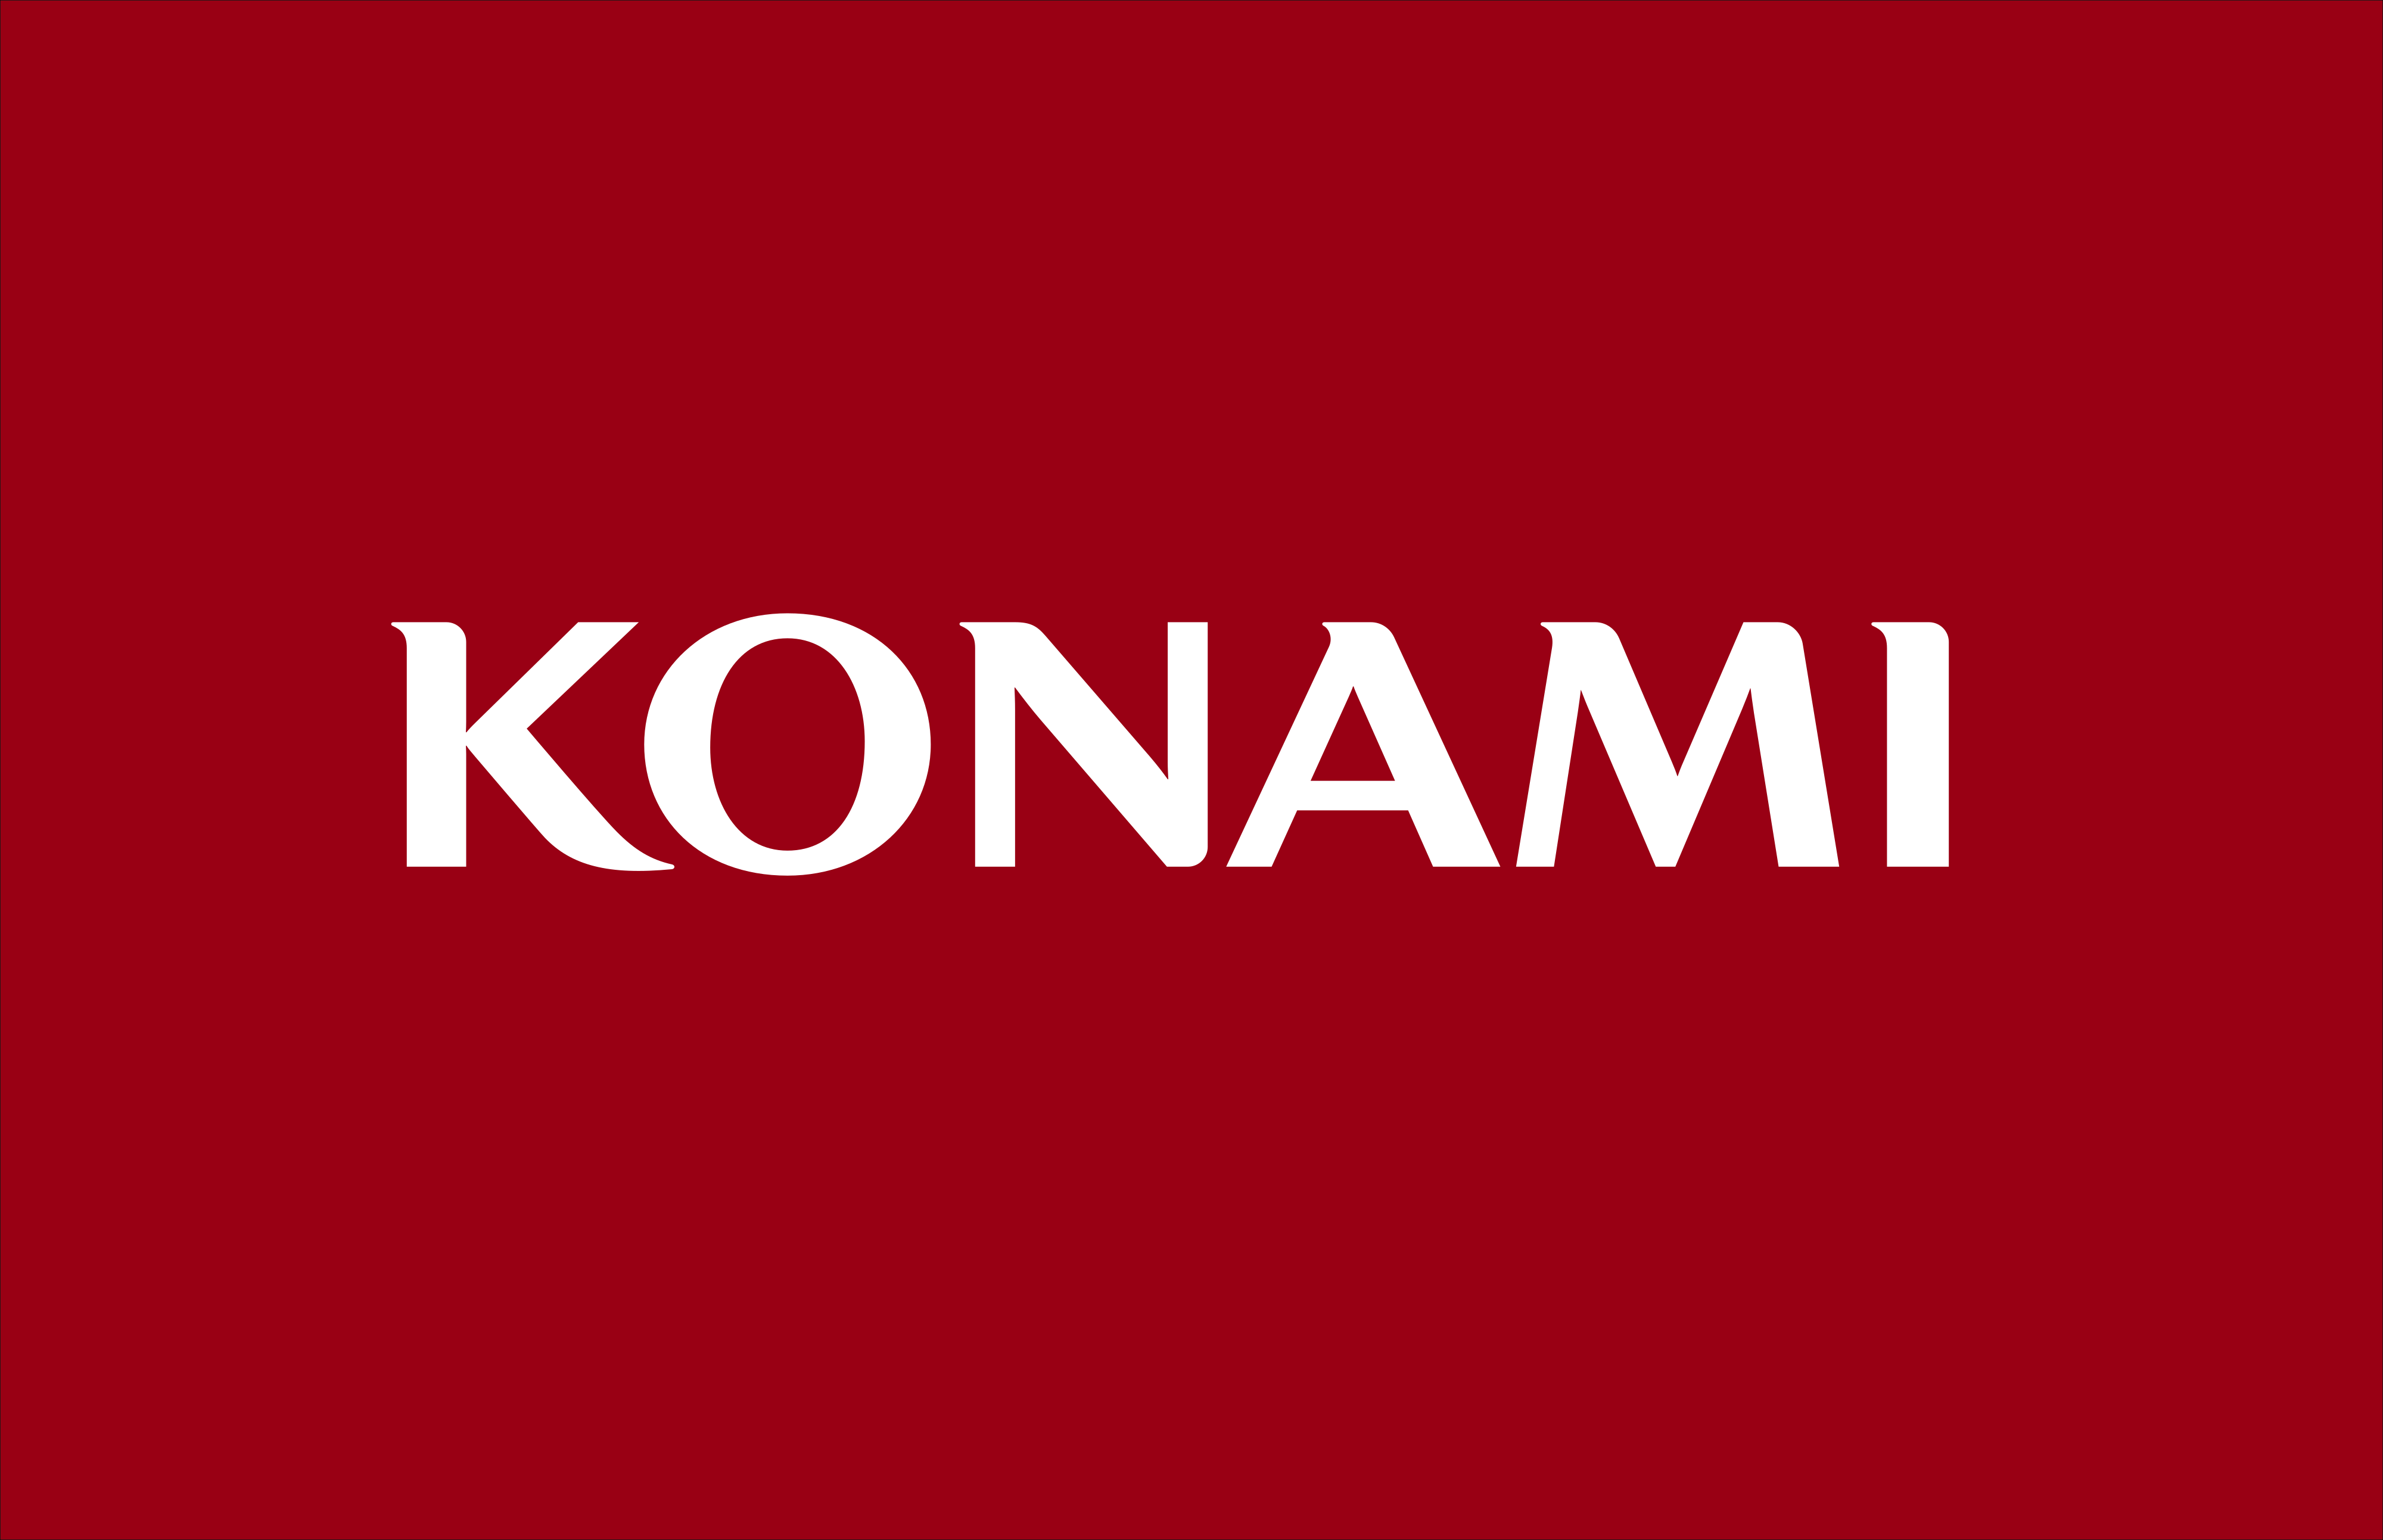 konami logo 10 - Konami Logo